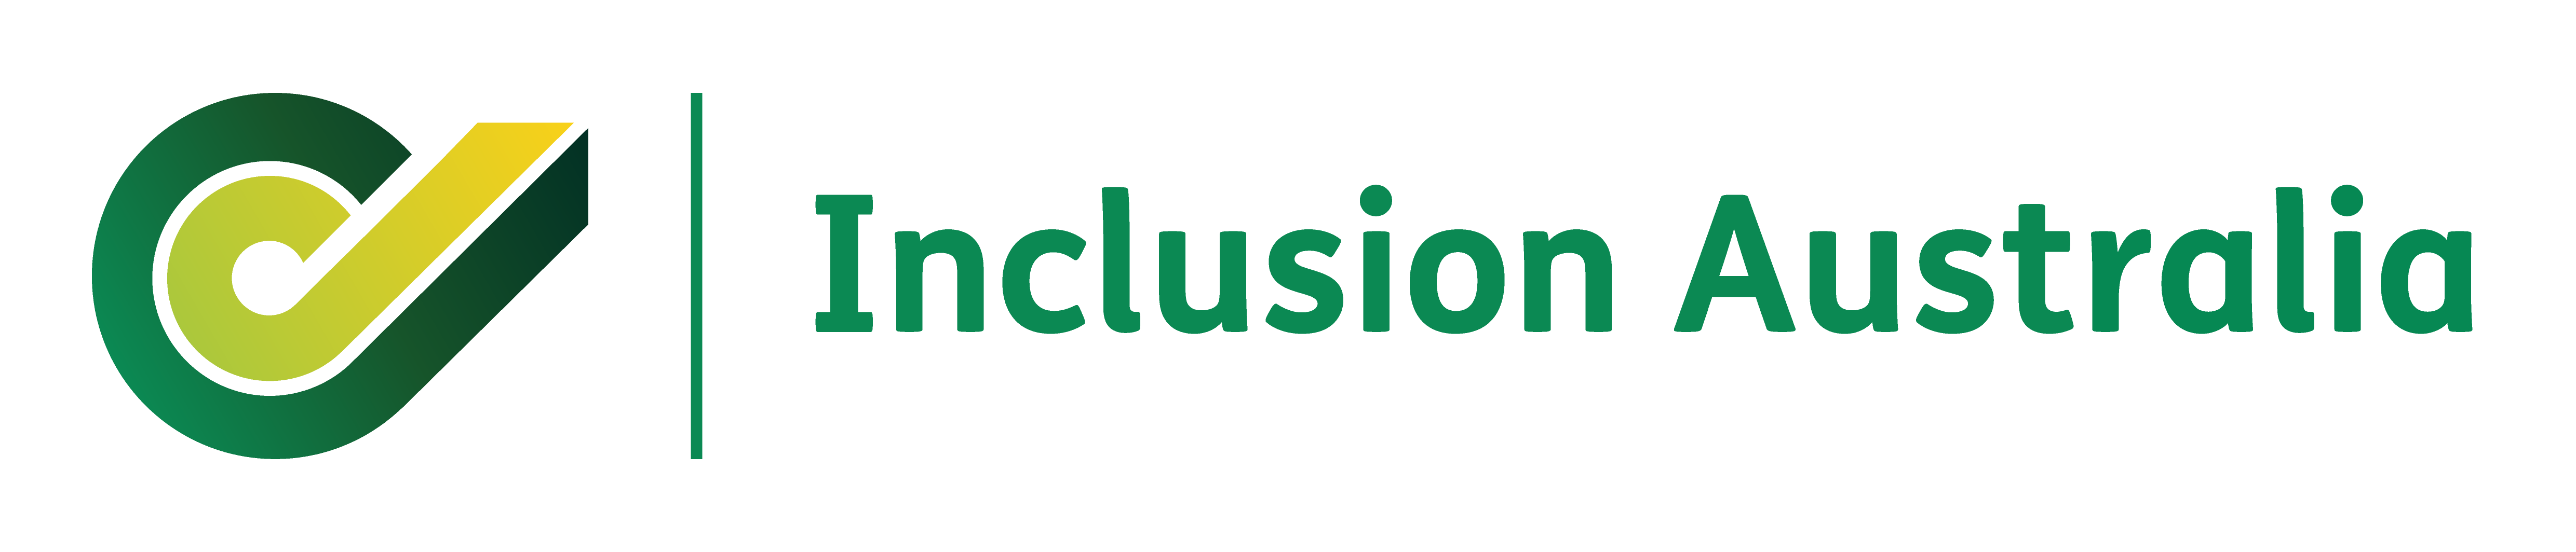 Inclusion Australia logo